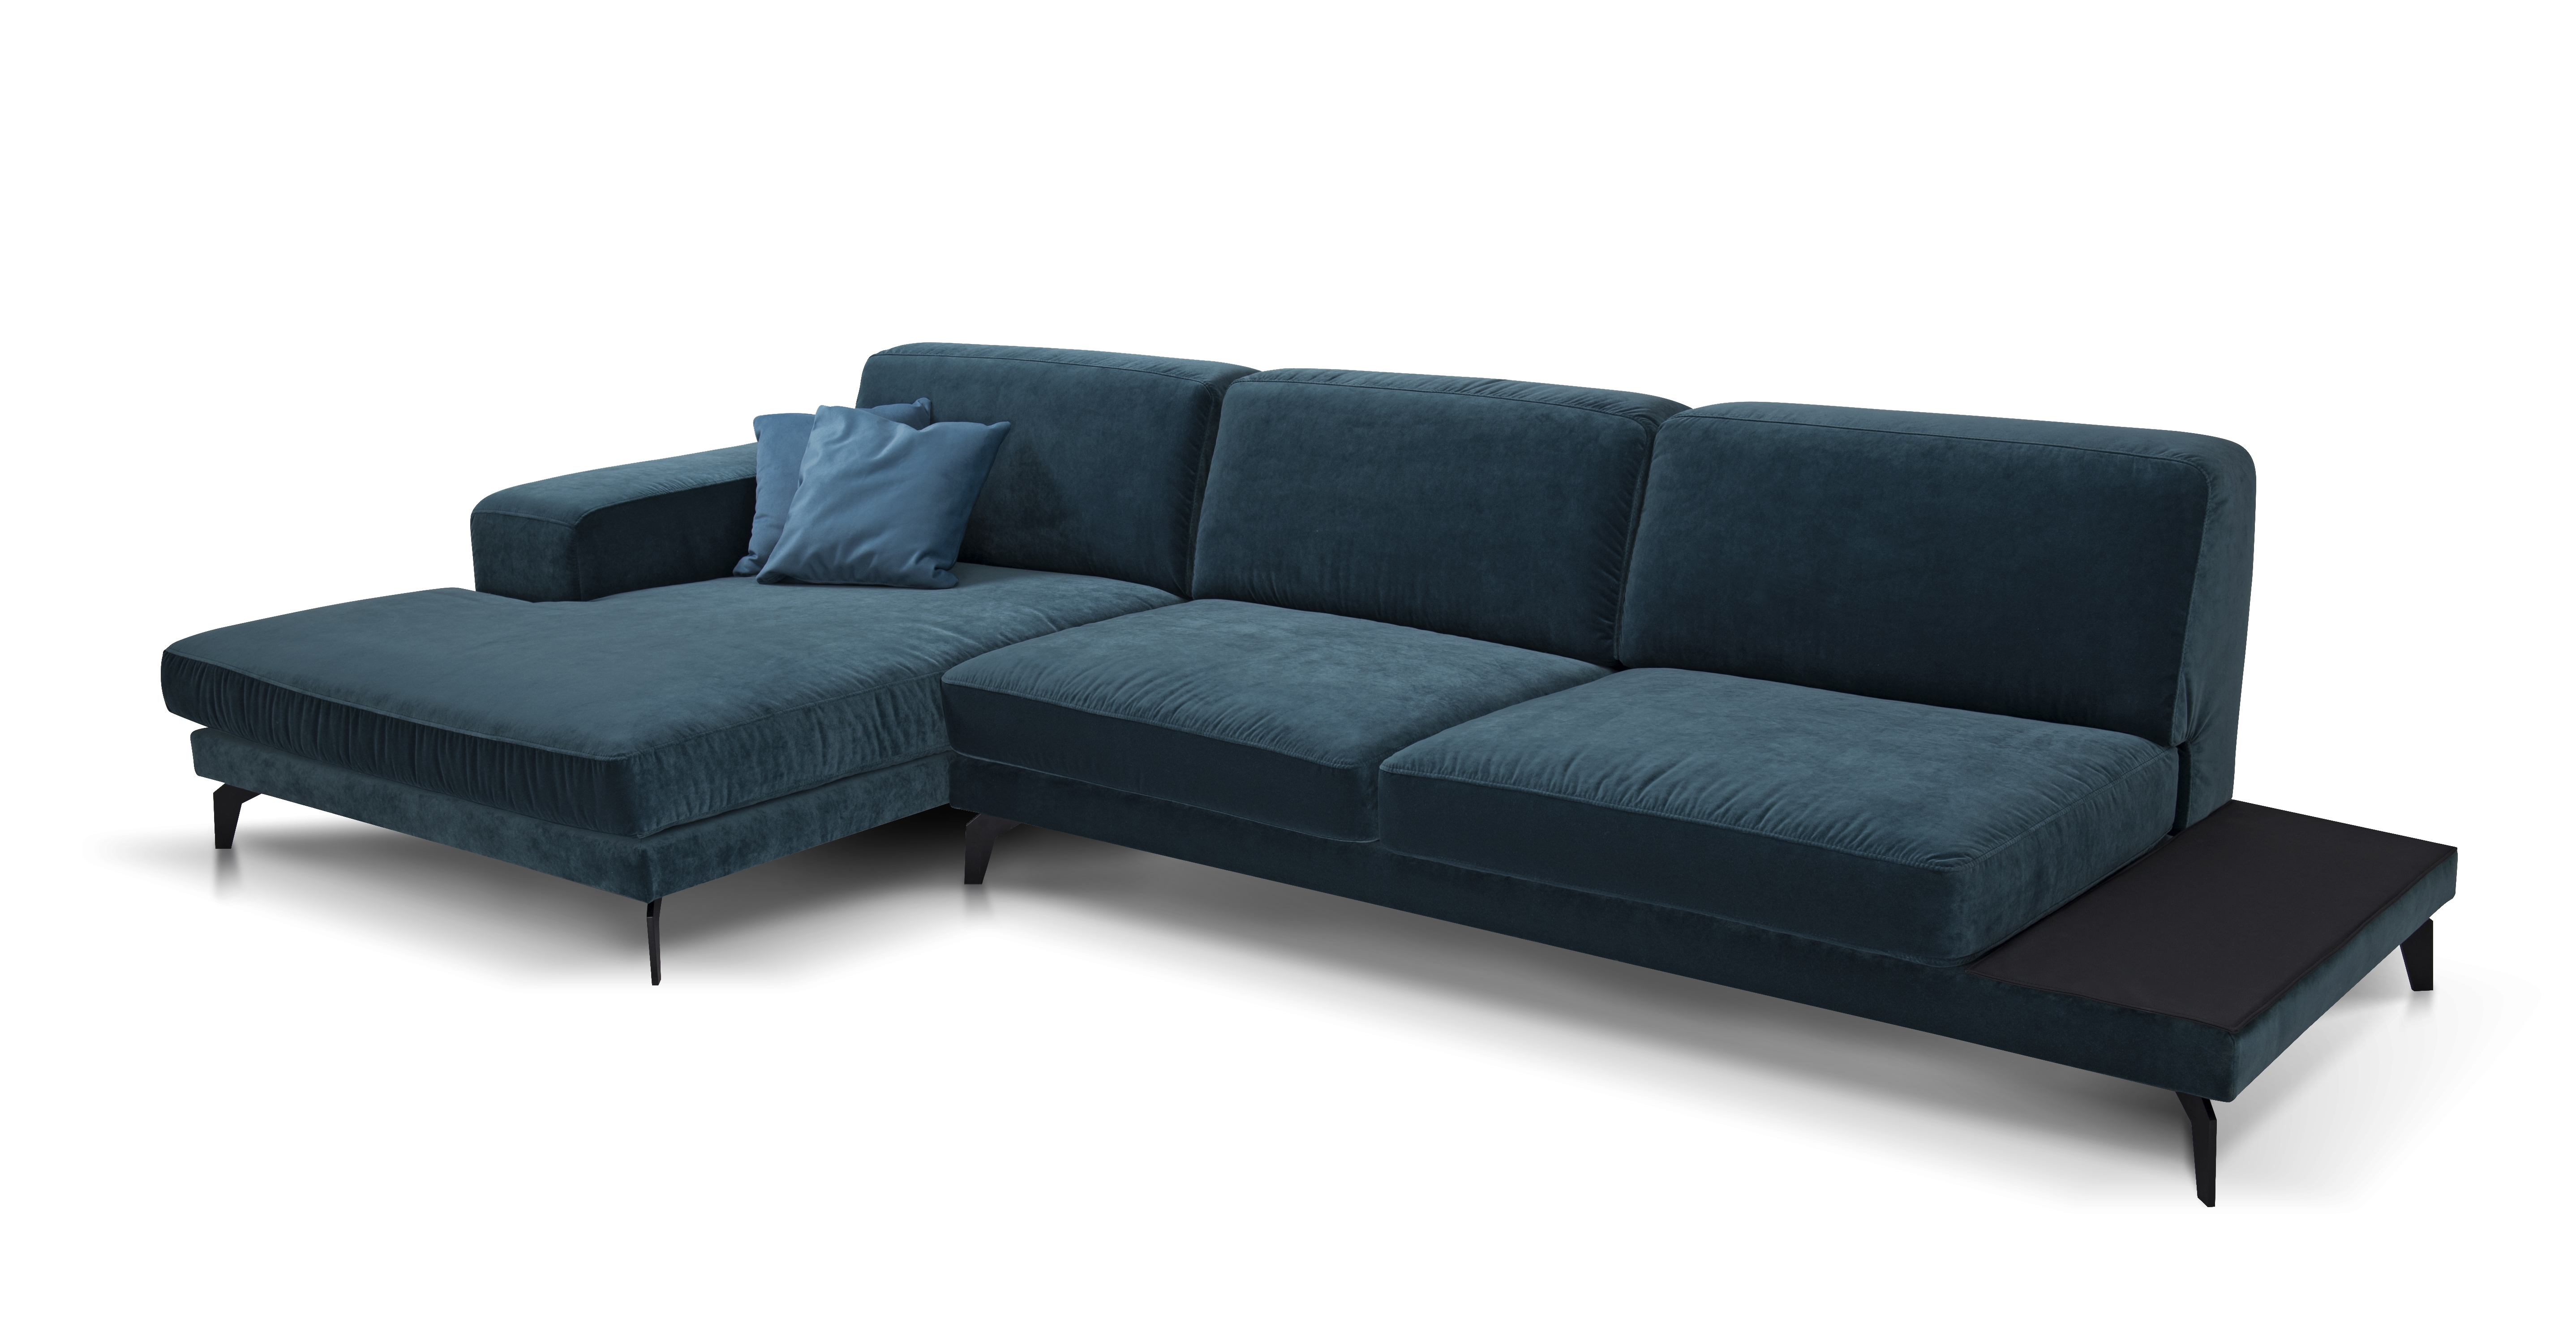 Kanapa modułowa - strefa komfortu z Inspirium 6 Inspirium sofa Enjoy